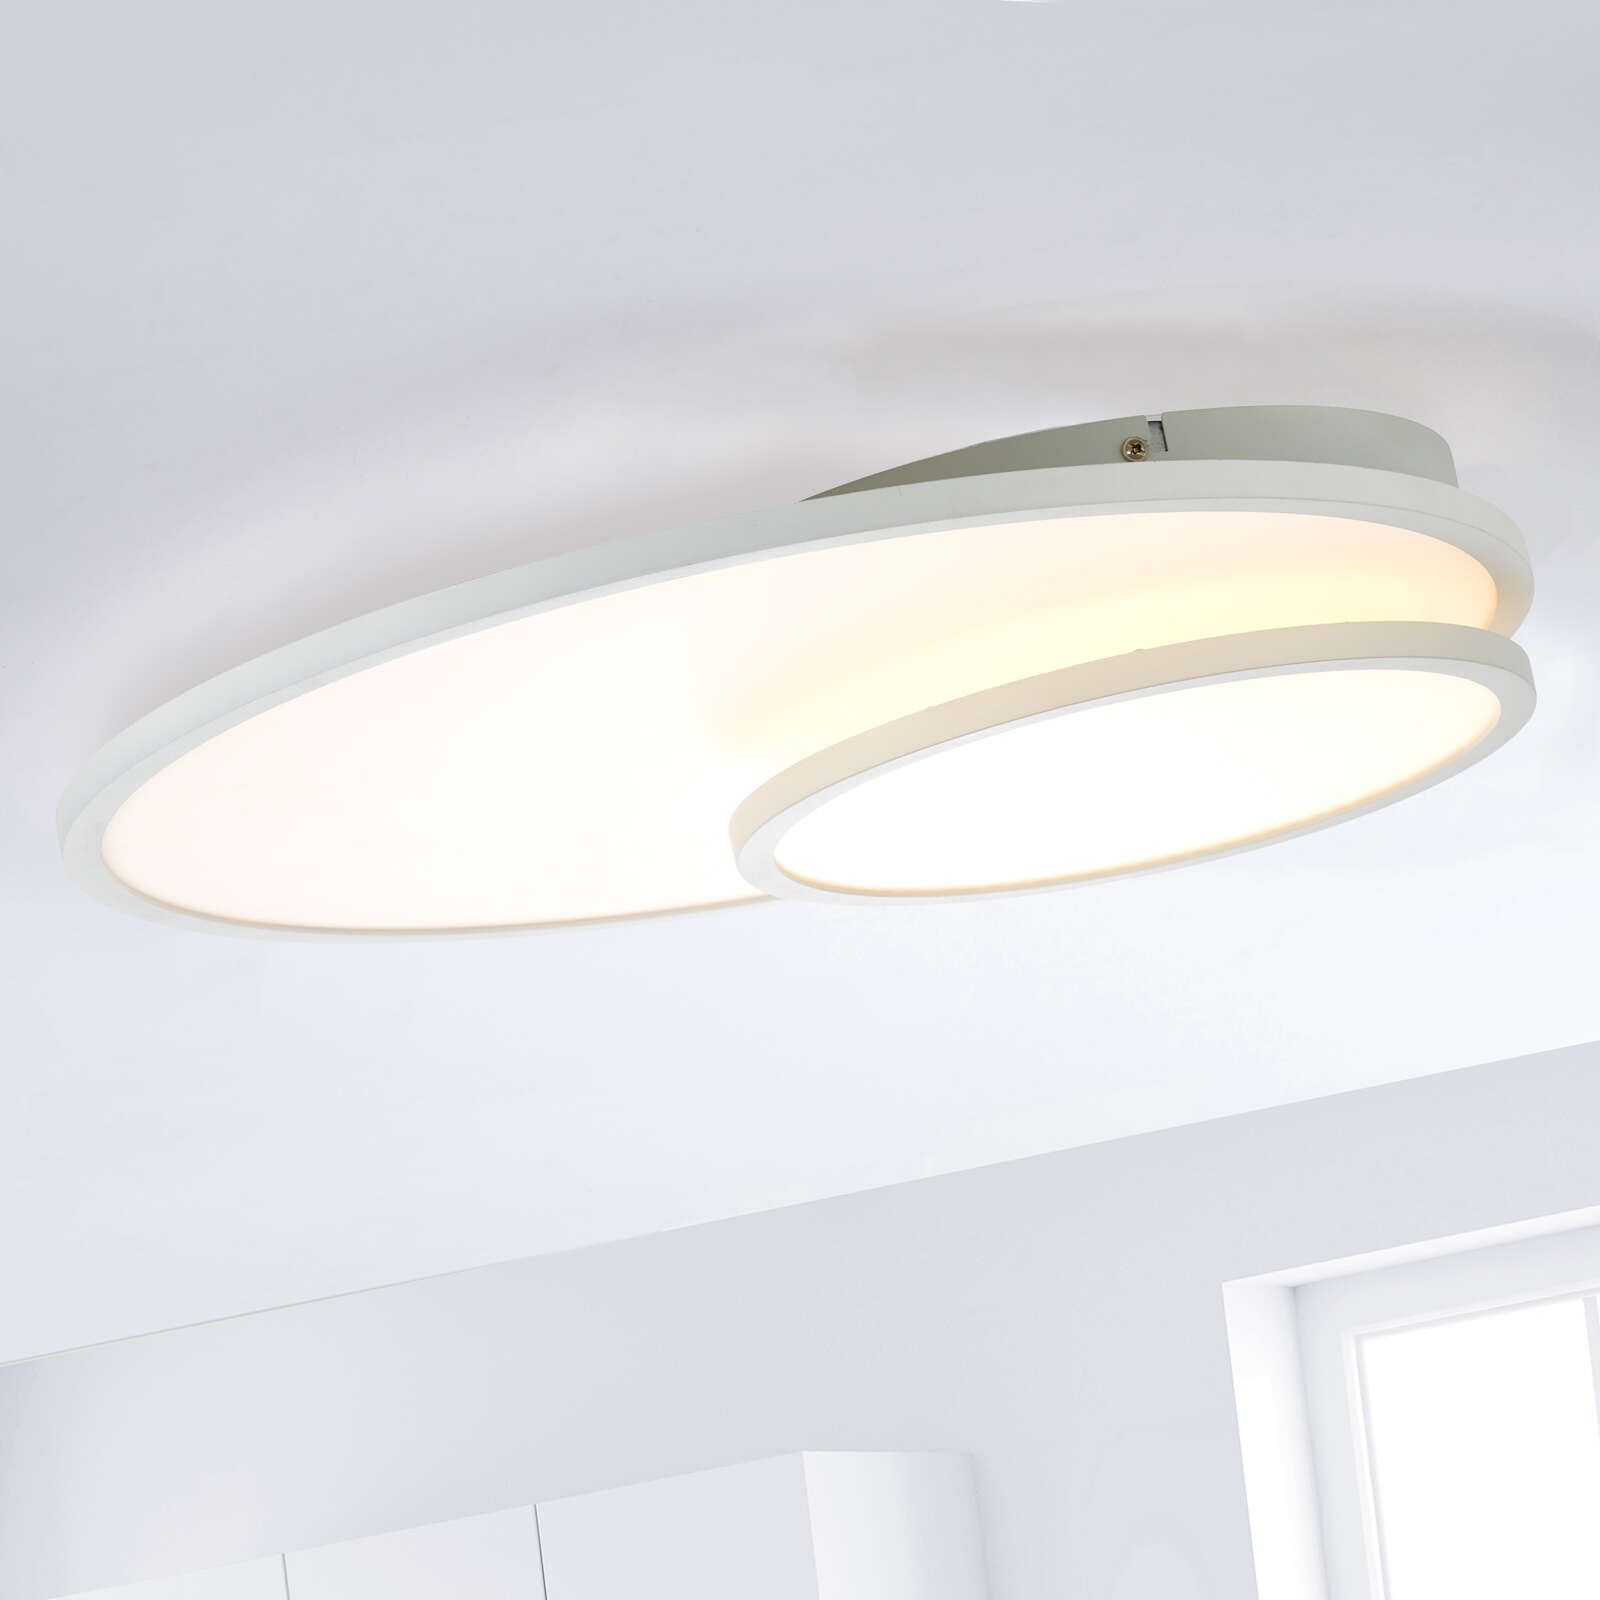             Metal ceiling light - Benno 2 - White
        